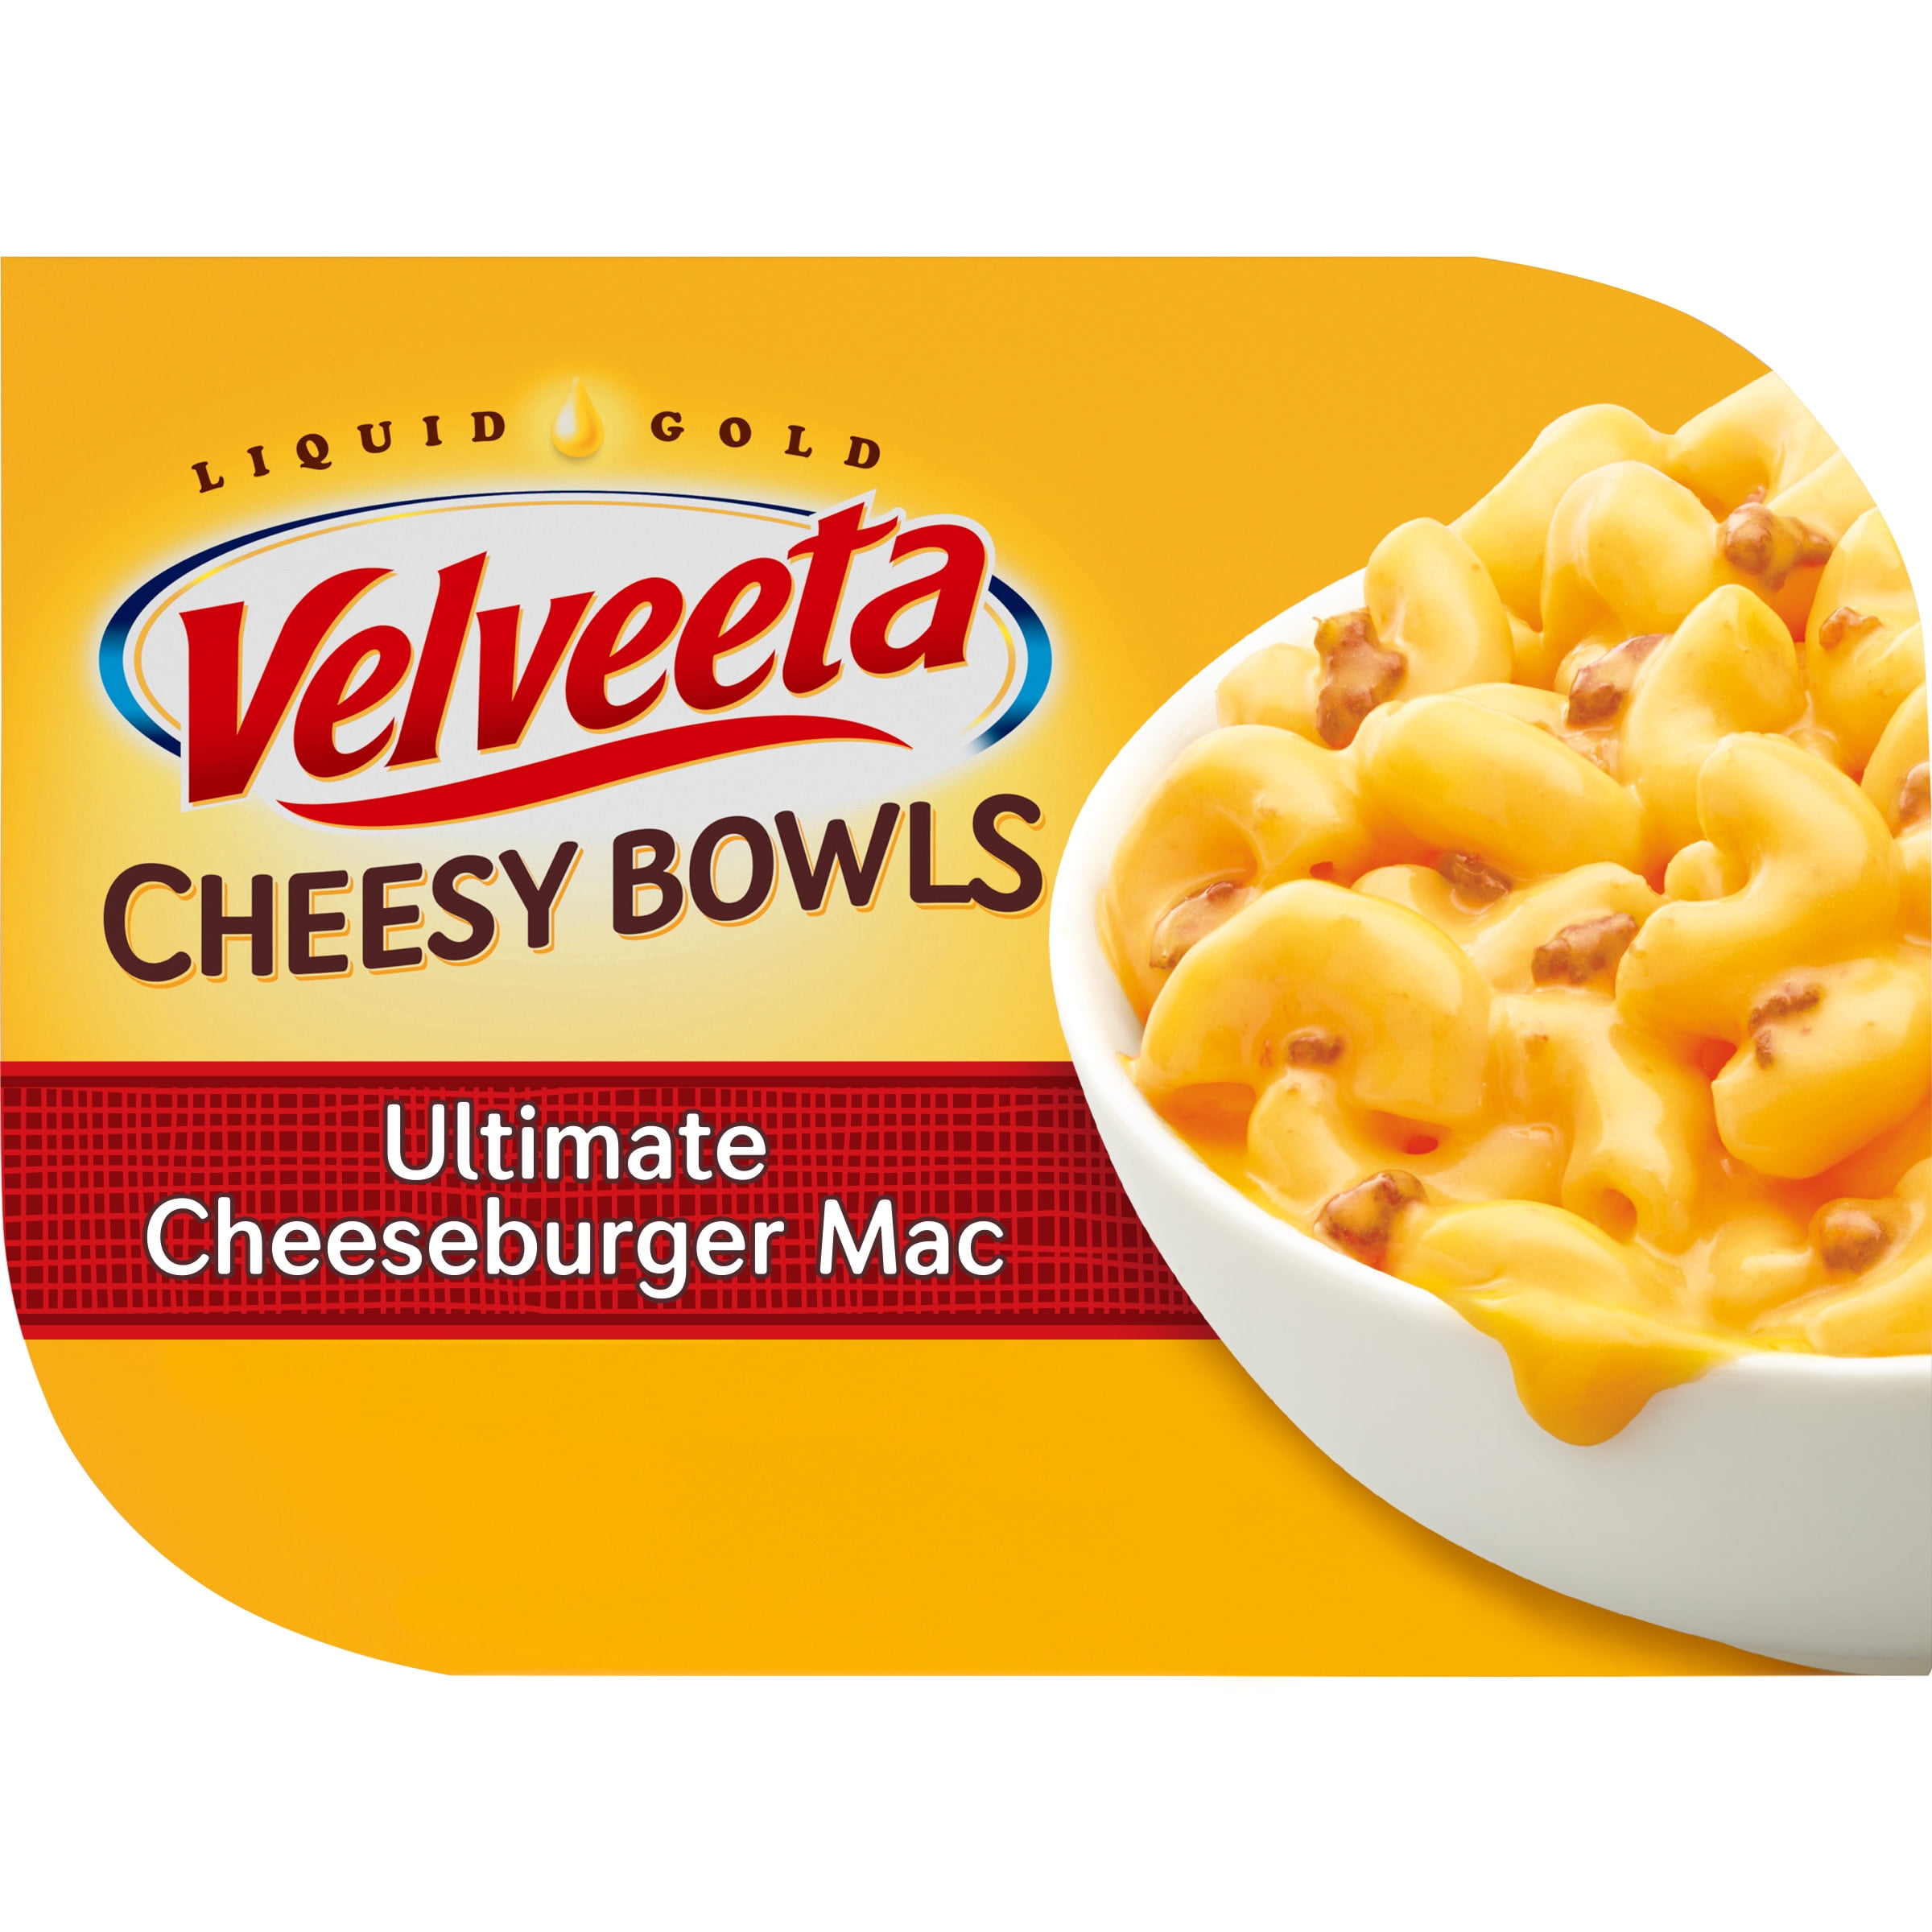 Velveeta Cheesy Bowls Ultimate Cheeseburger Mac Microwave Meal, 9 oz Tray